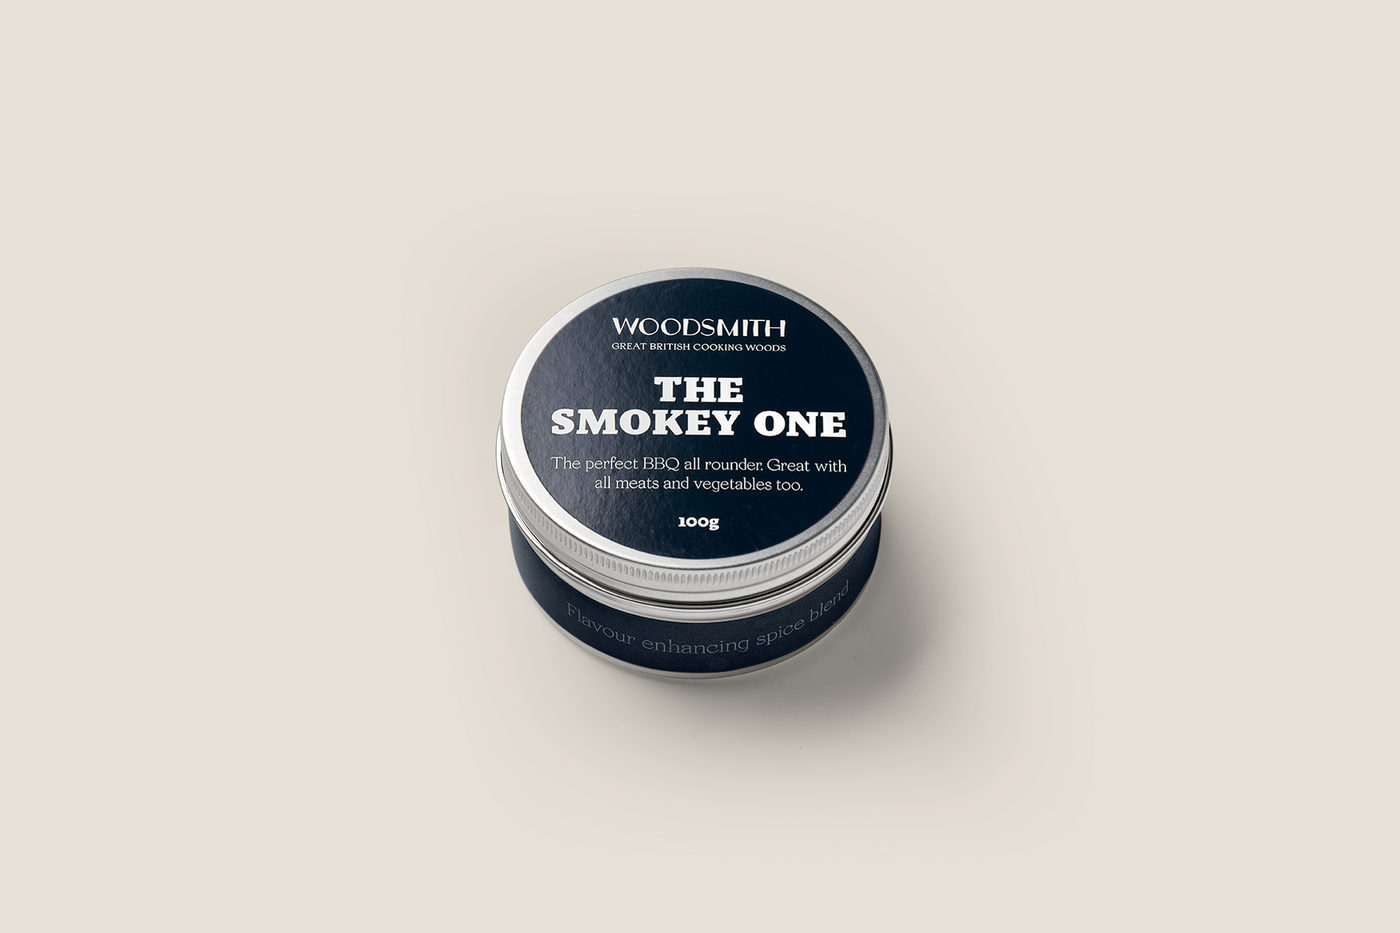 The Smokey One